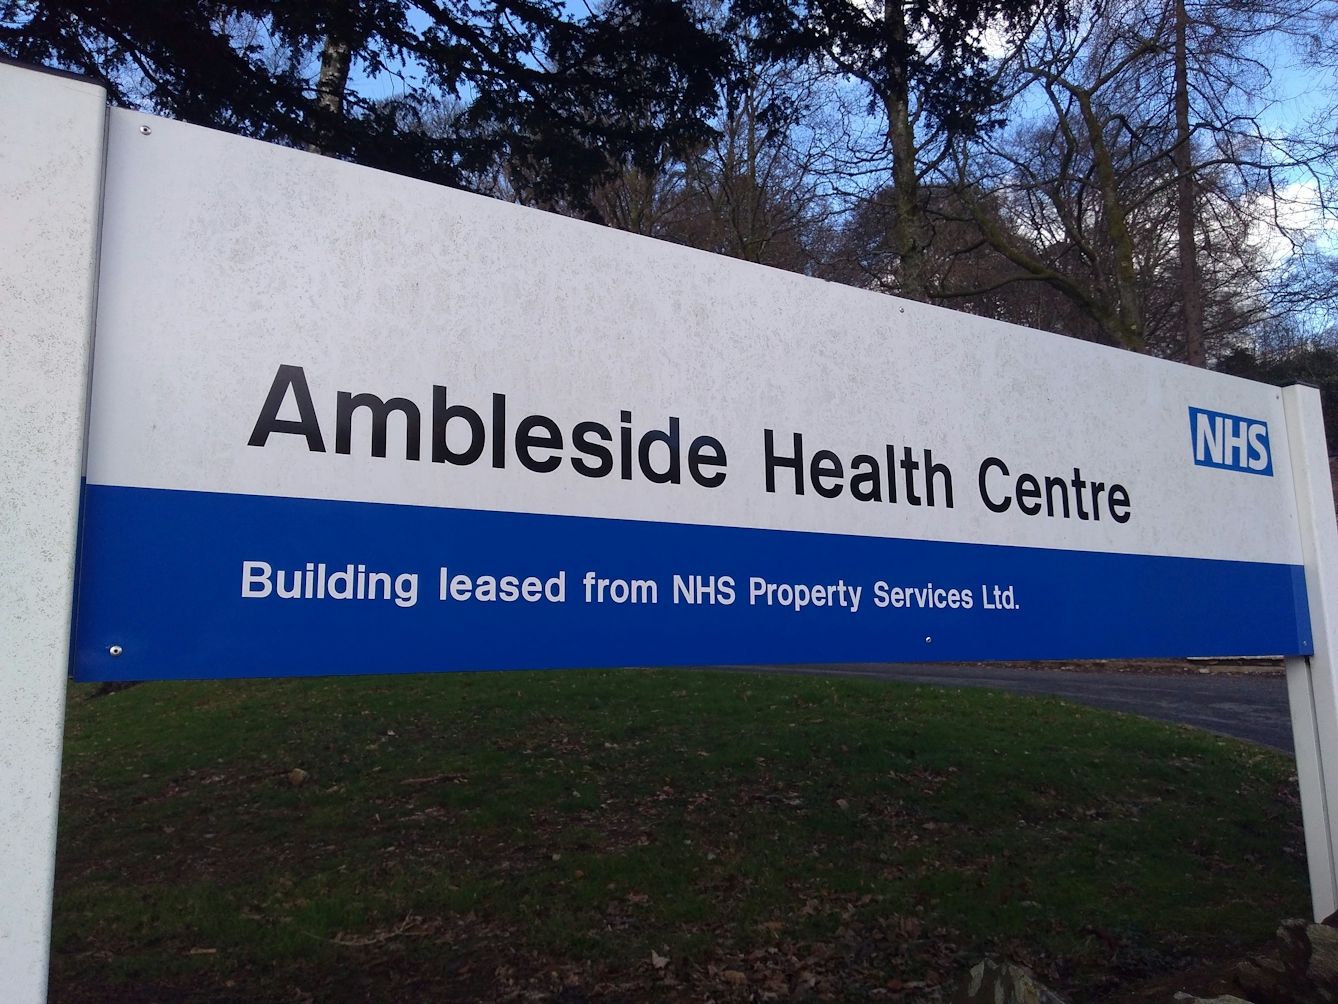 Colour photograph of a sign for Ambleside Health Centre